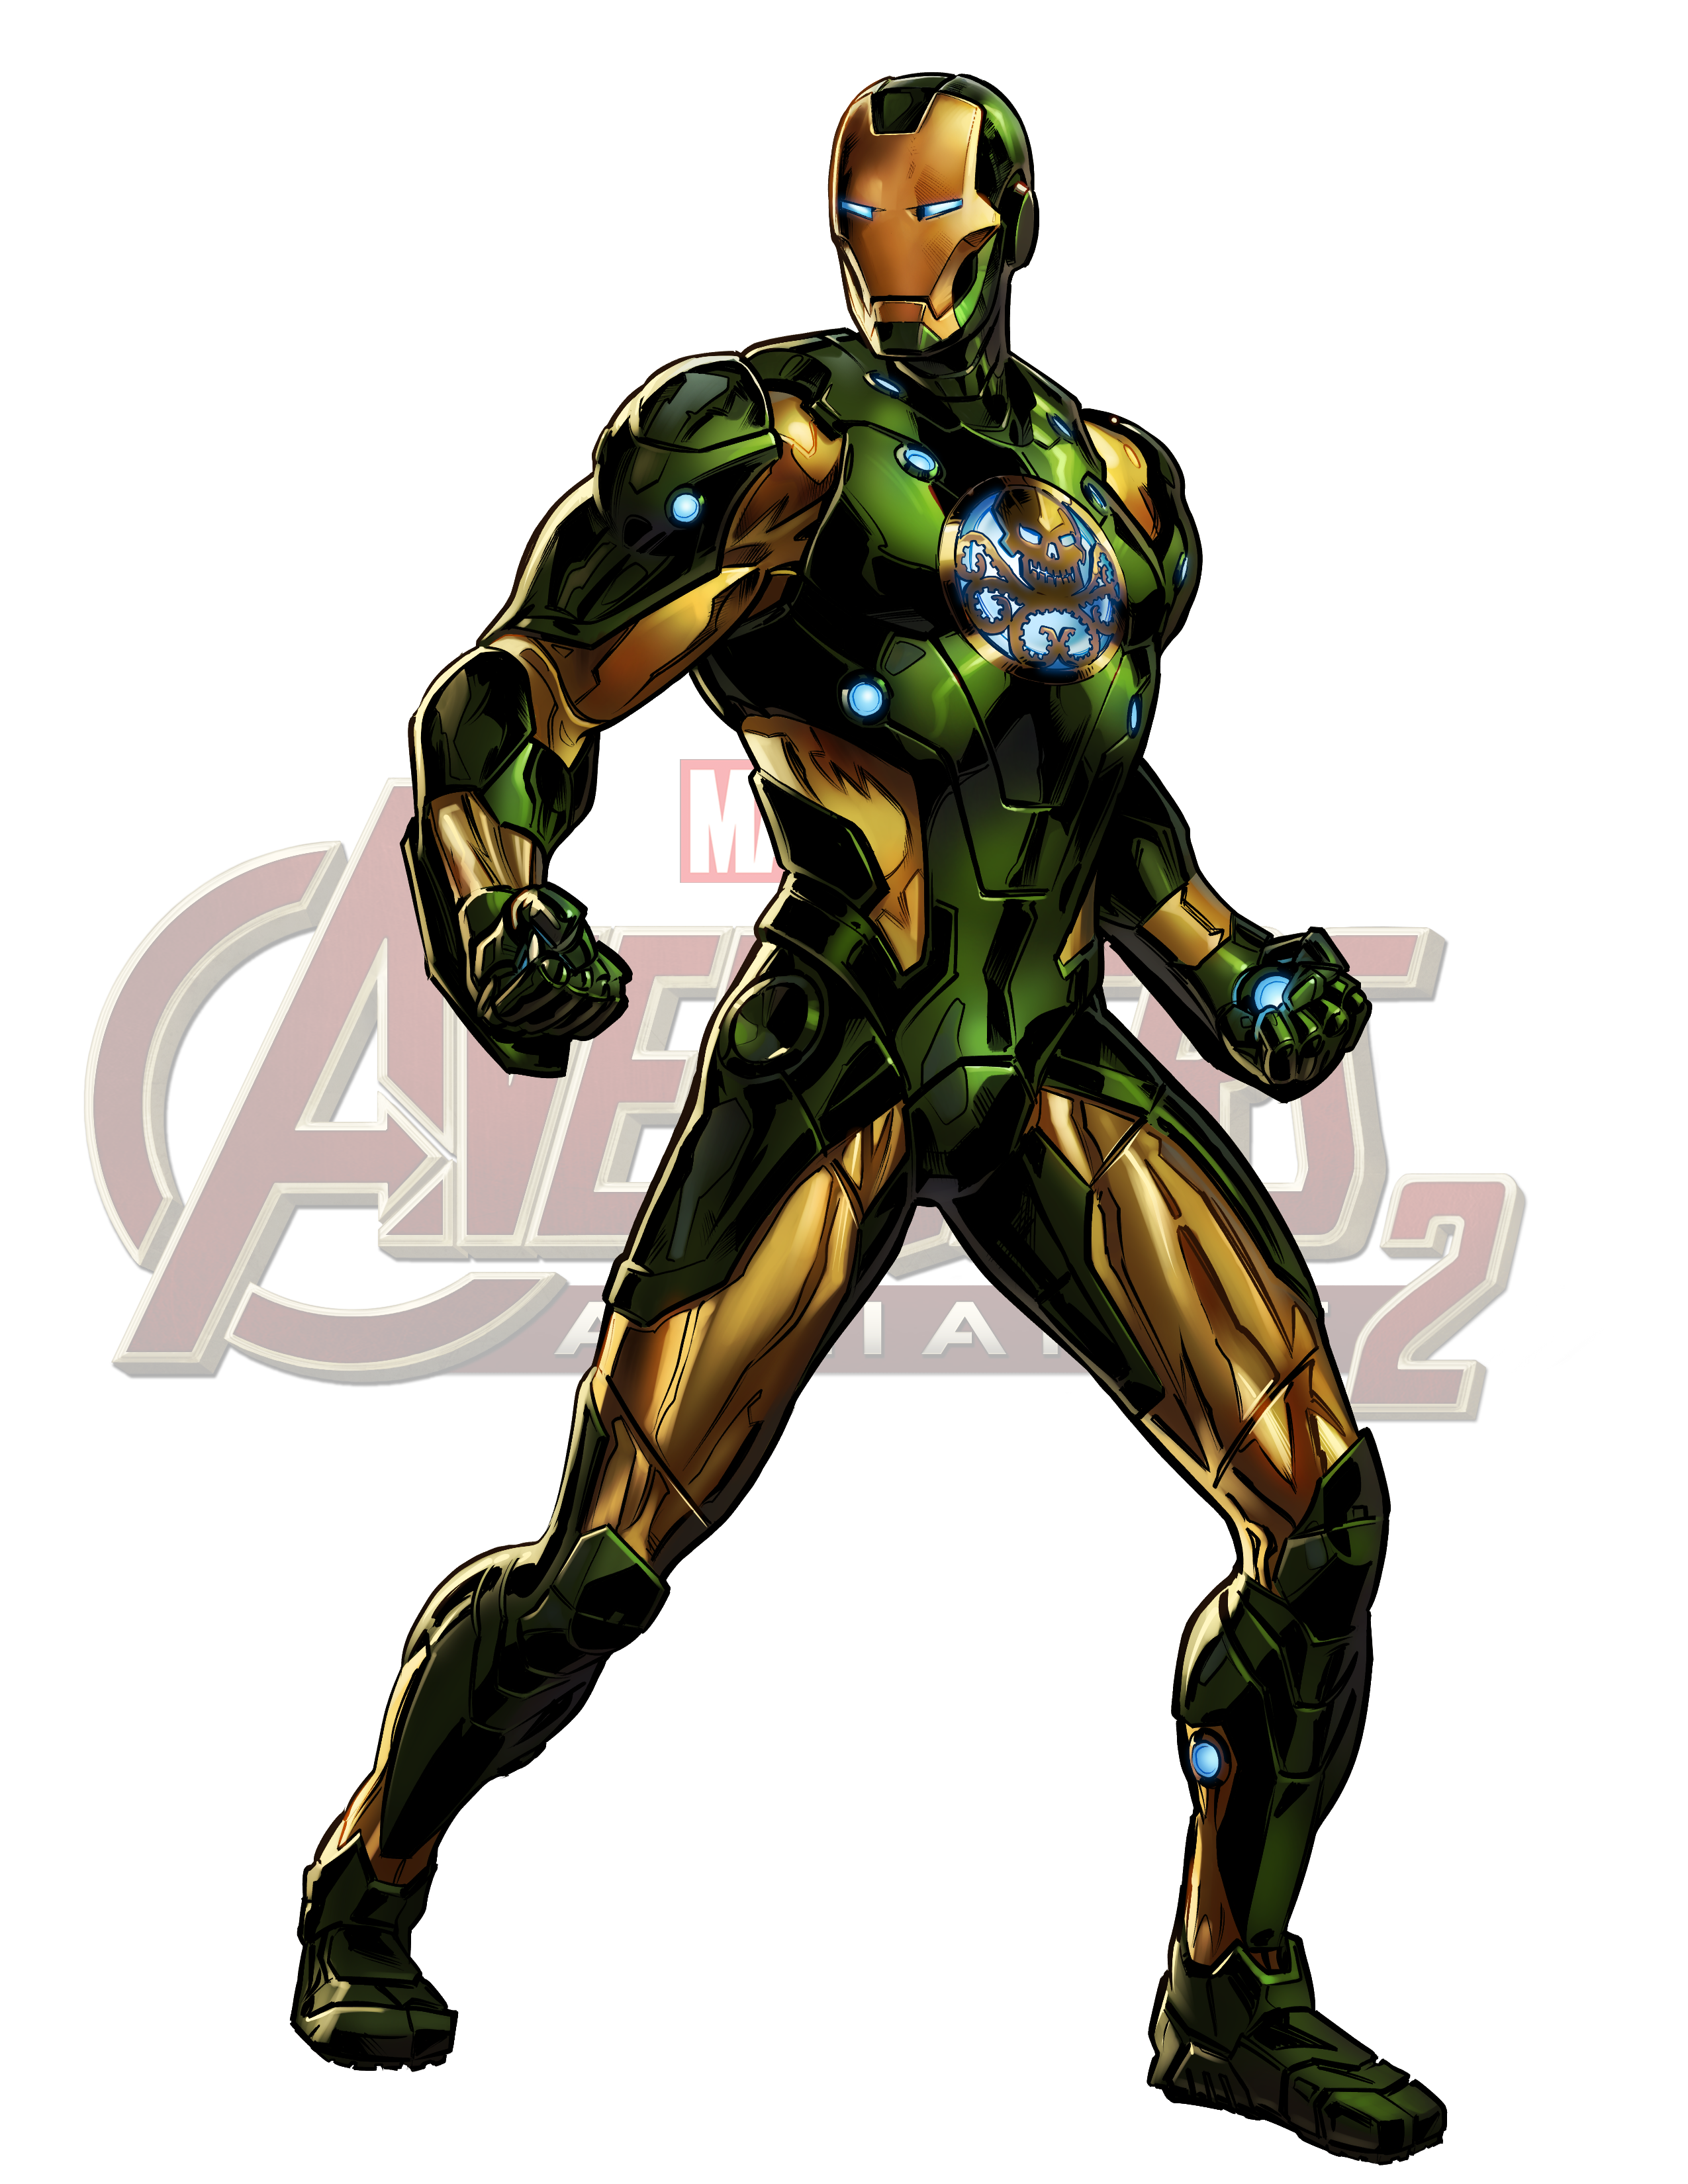 Marvel: Avengers Alliance Backgrounds, Compatible - PC, Mobile, Gadgets| 2550x3300 px